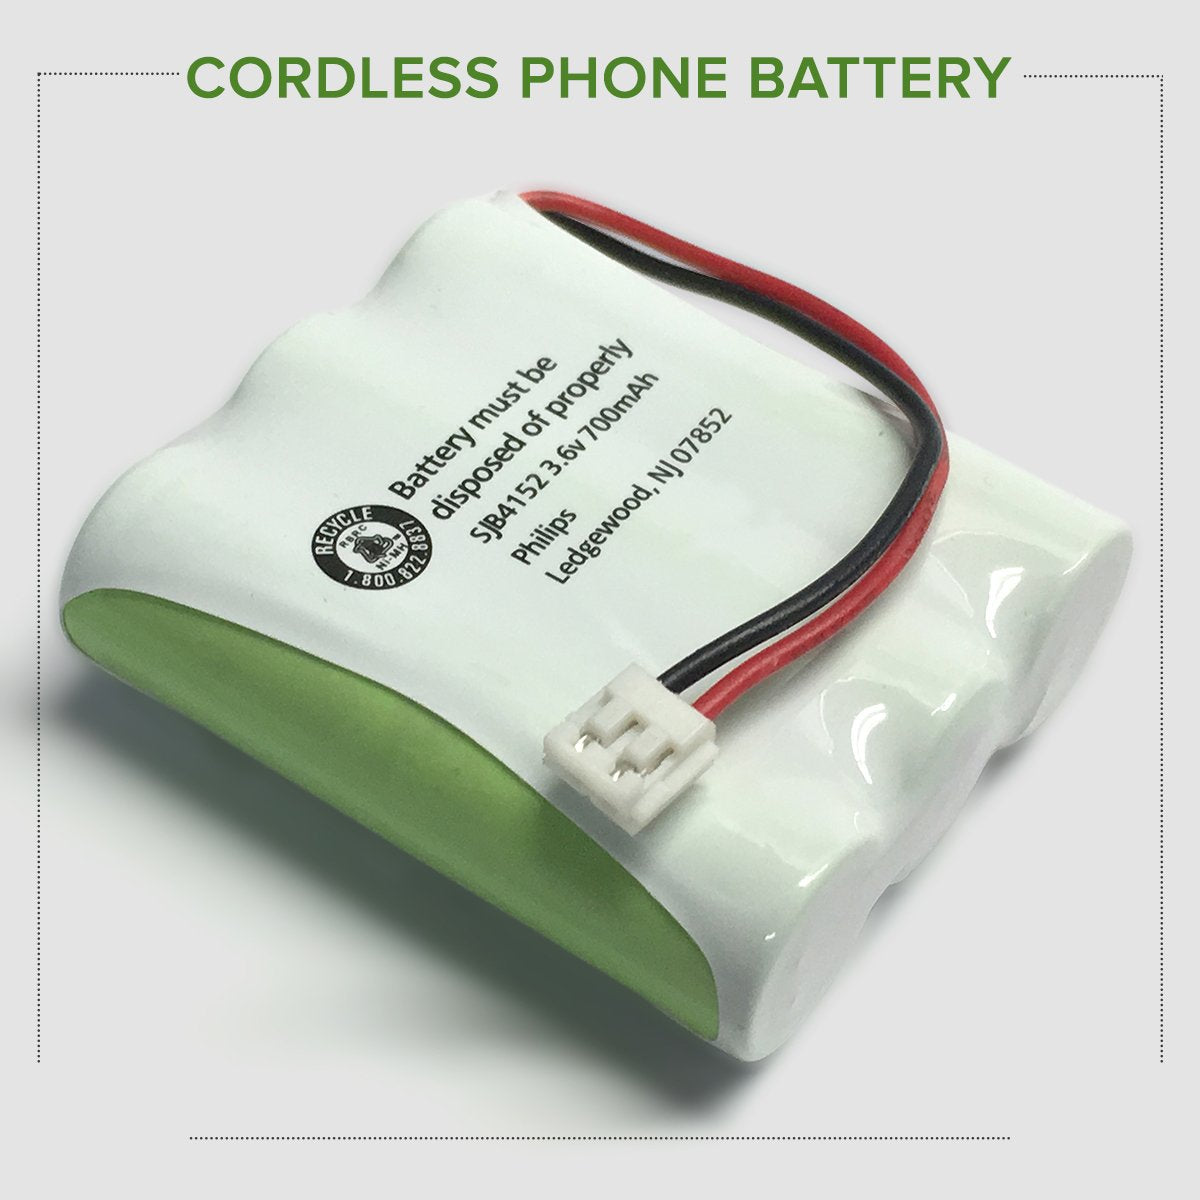 GE 2-5860 Cordless Phone Battery